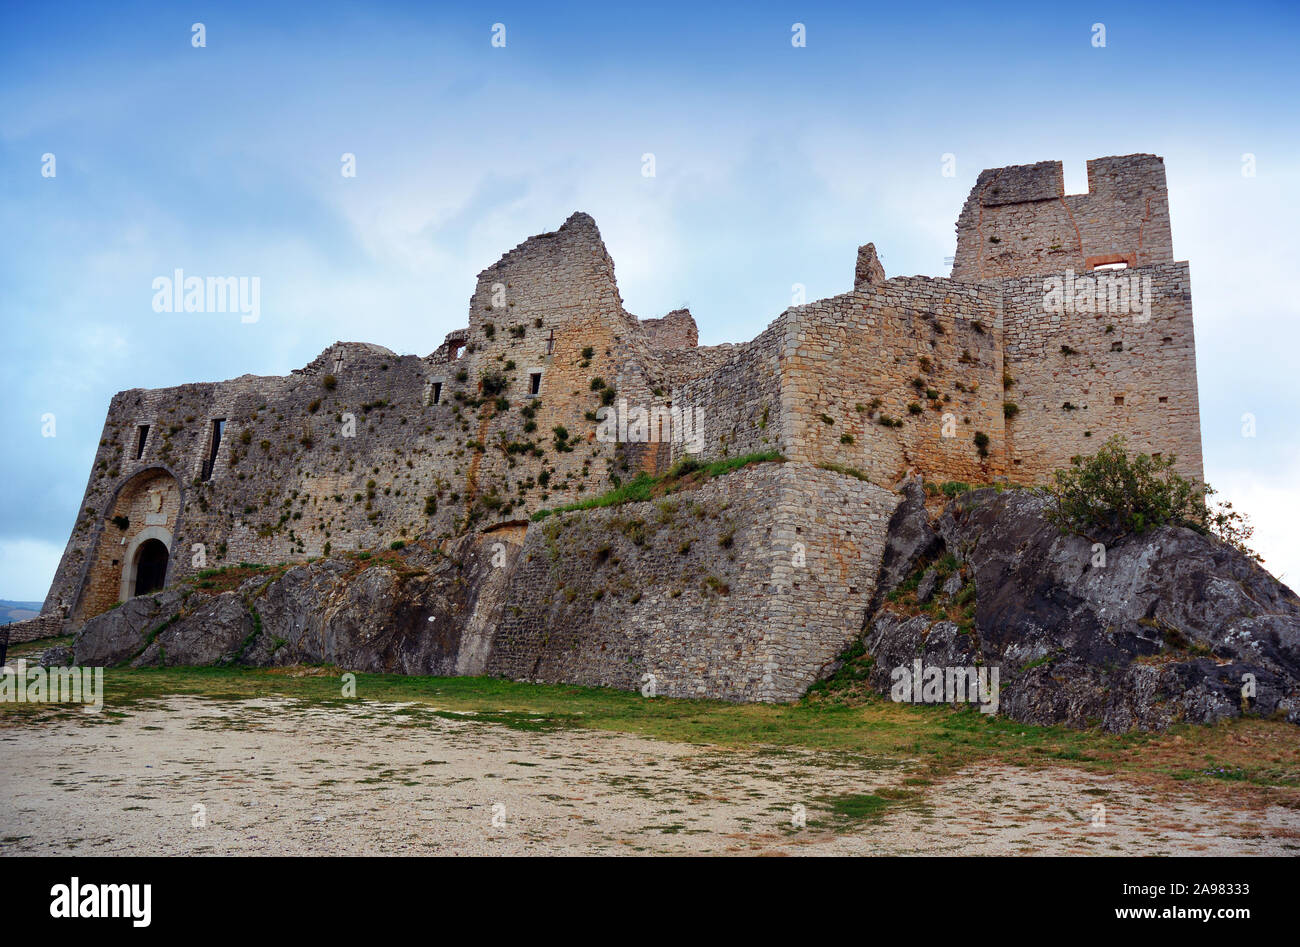 Castropignano, Molise, Italy- The stone castle of Evoli. Stock Photo